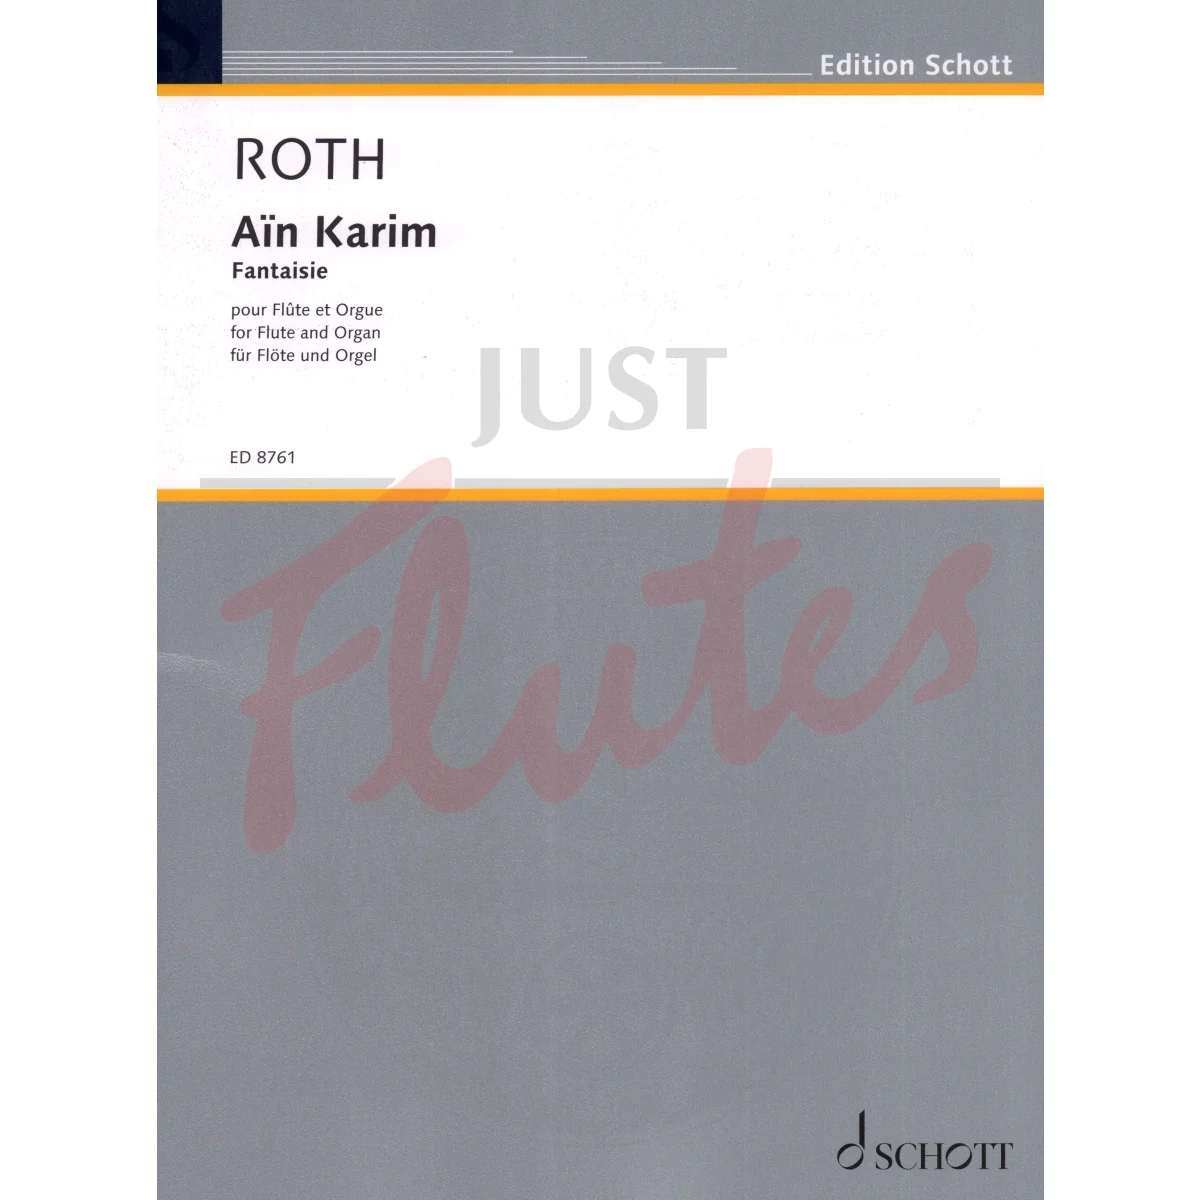 Ain Karim Fantasie for Flute and Organ